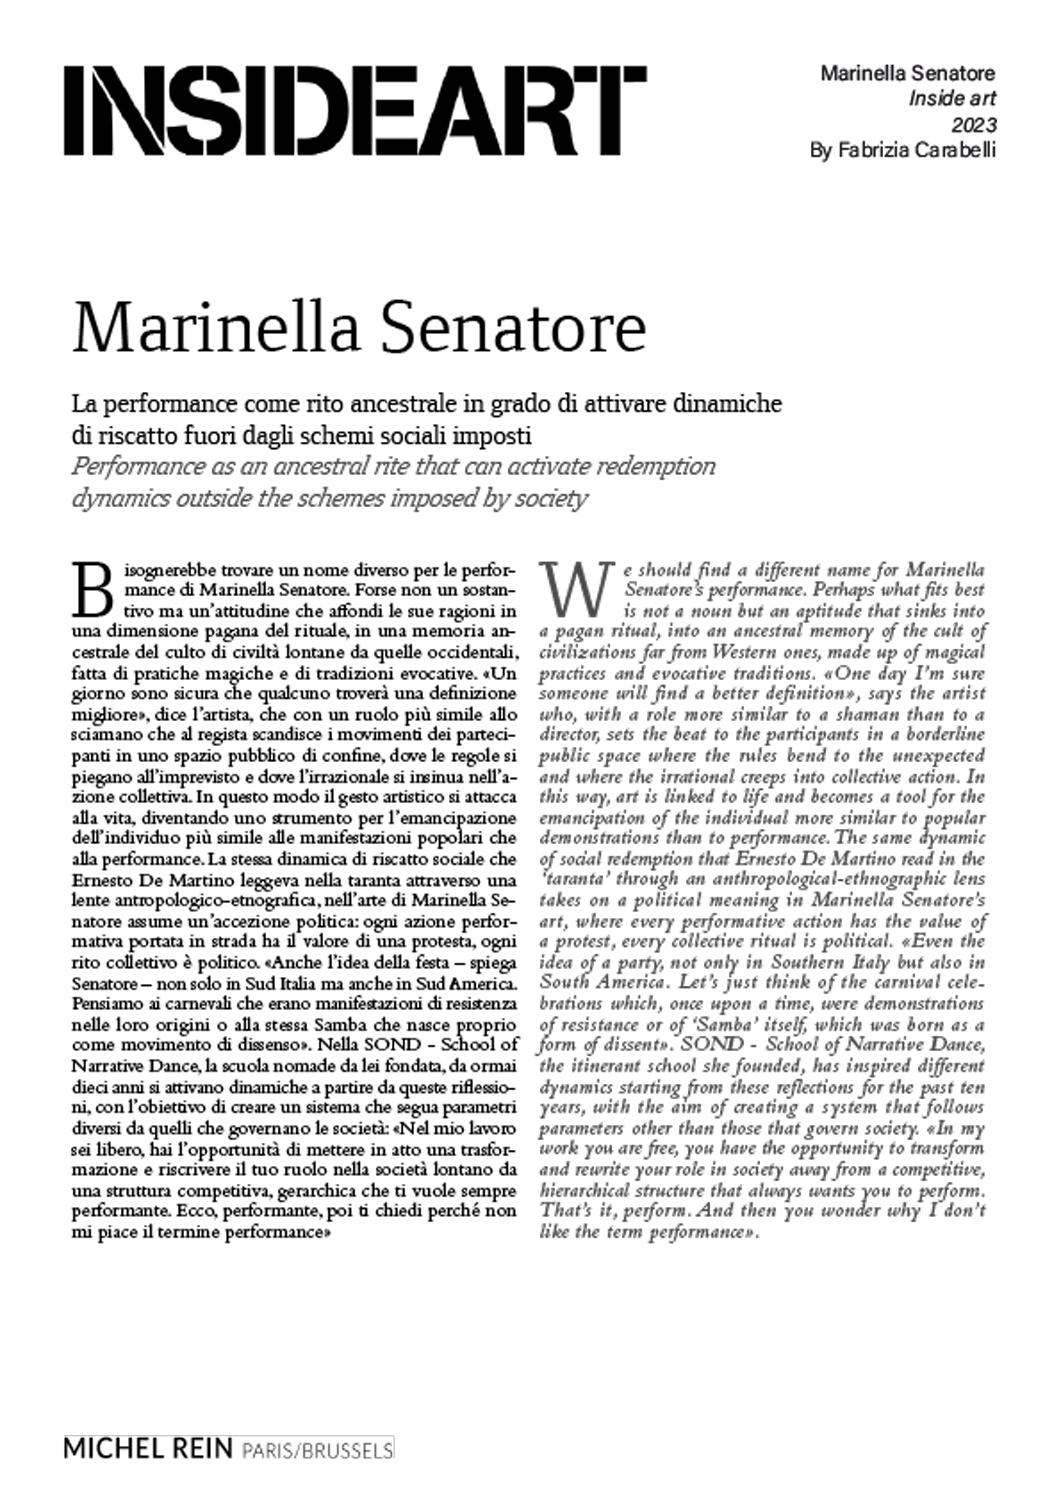 Marinella Senatore - Inside Art